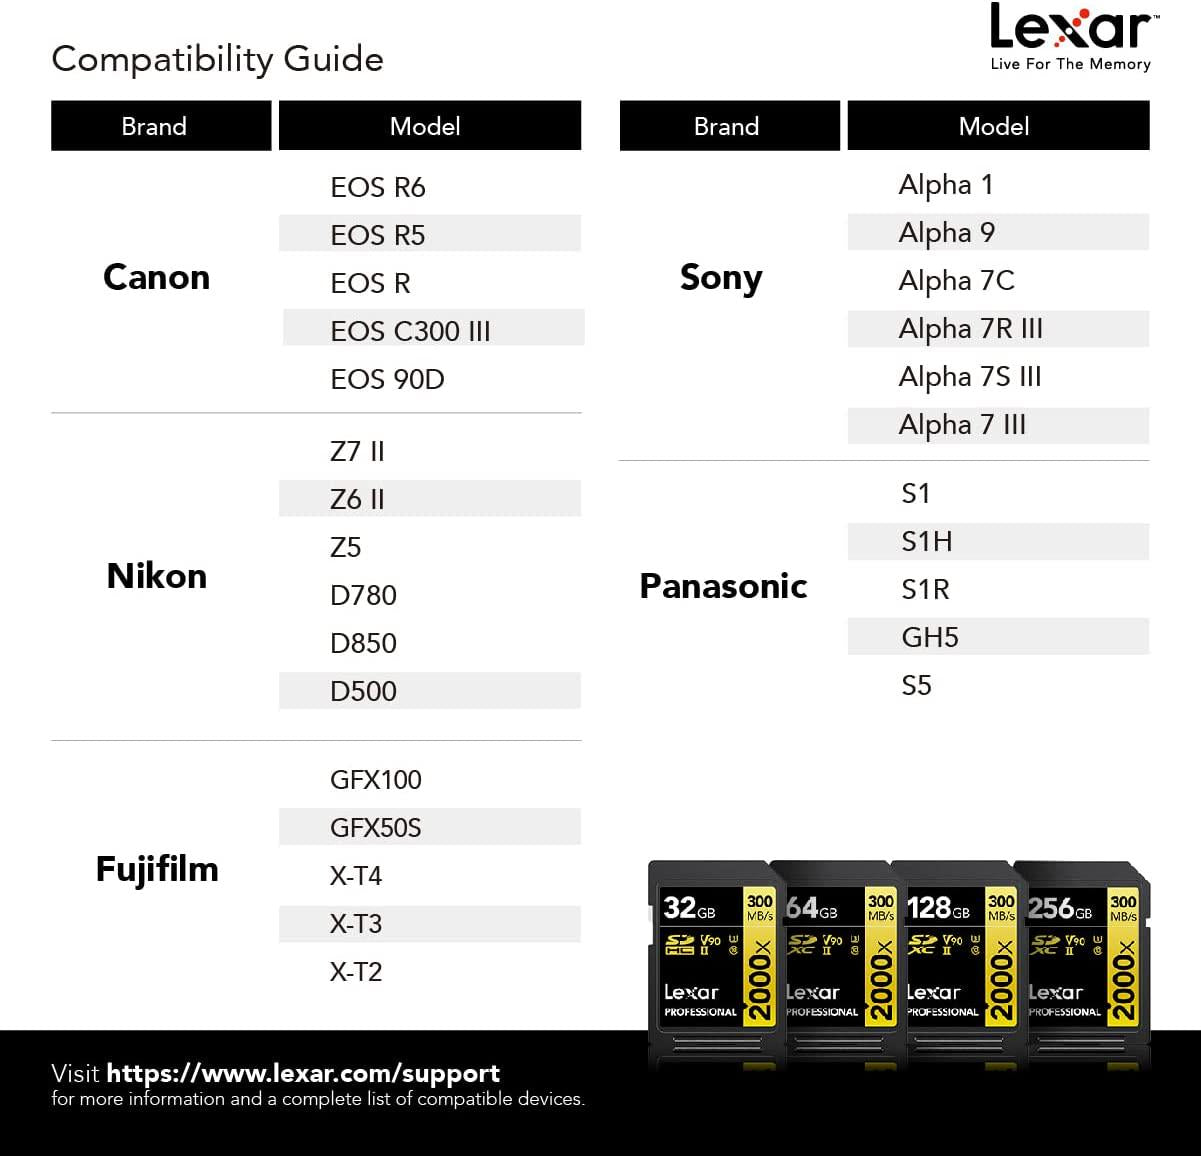 Lexar, Lexar Professional 2000x 128GB SDXC UHS-II Card, Up to 300MB/s Read, for DSLR, Cinema-Quality Video Cameras (LSD2000128G-BNNNU)